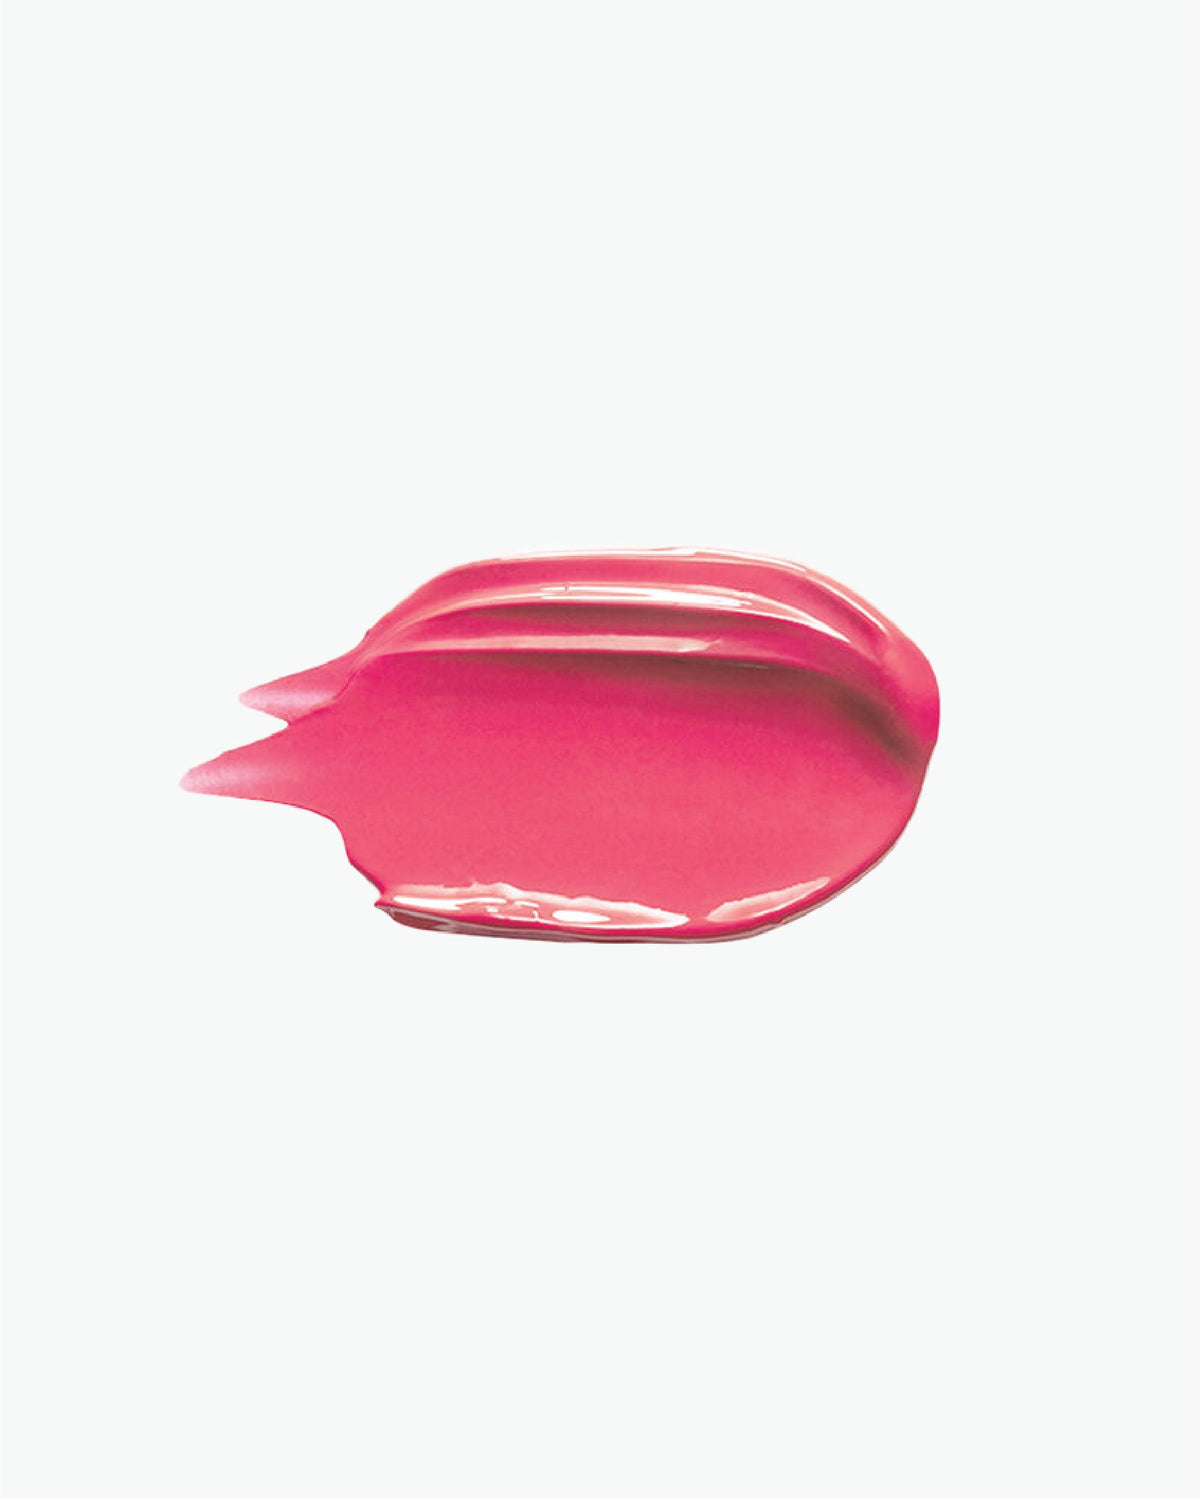 Vision Airy Gel Lipstick 1.6g